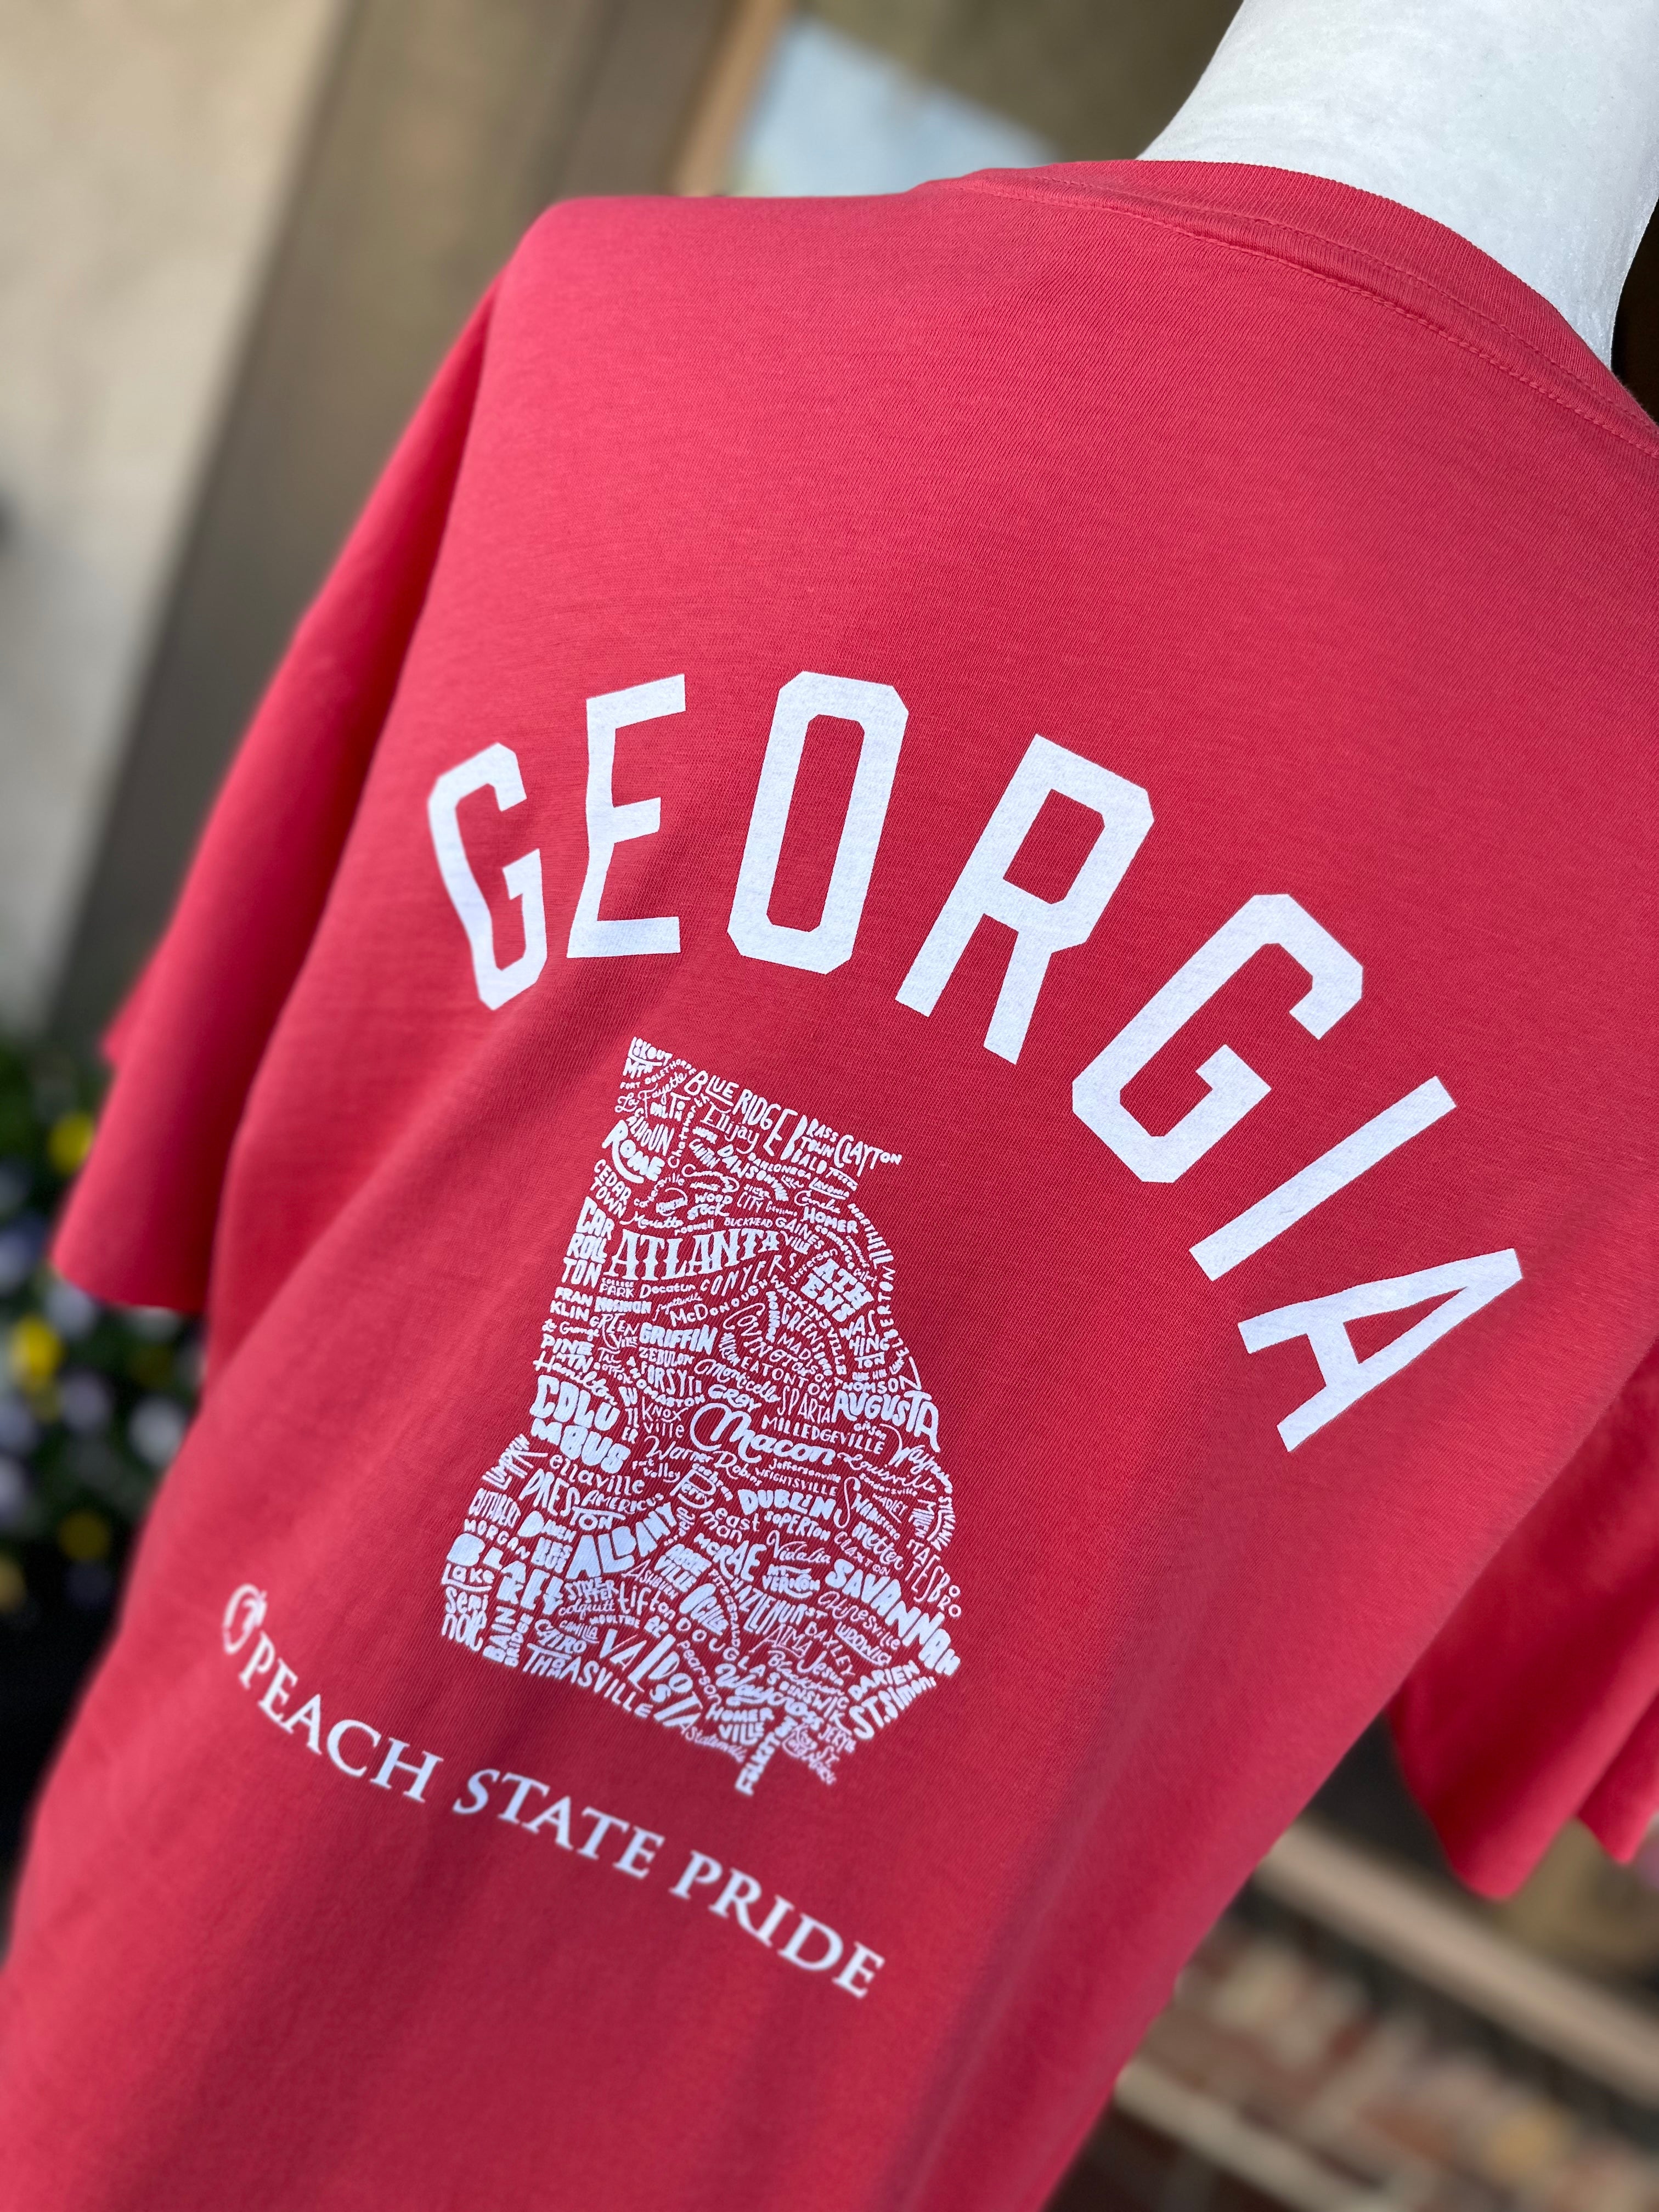 Peach State Pride State of Georgia Short Sleeve Tee